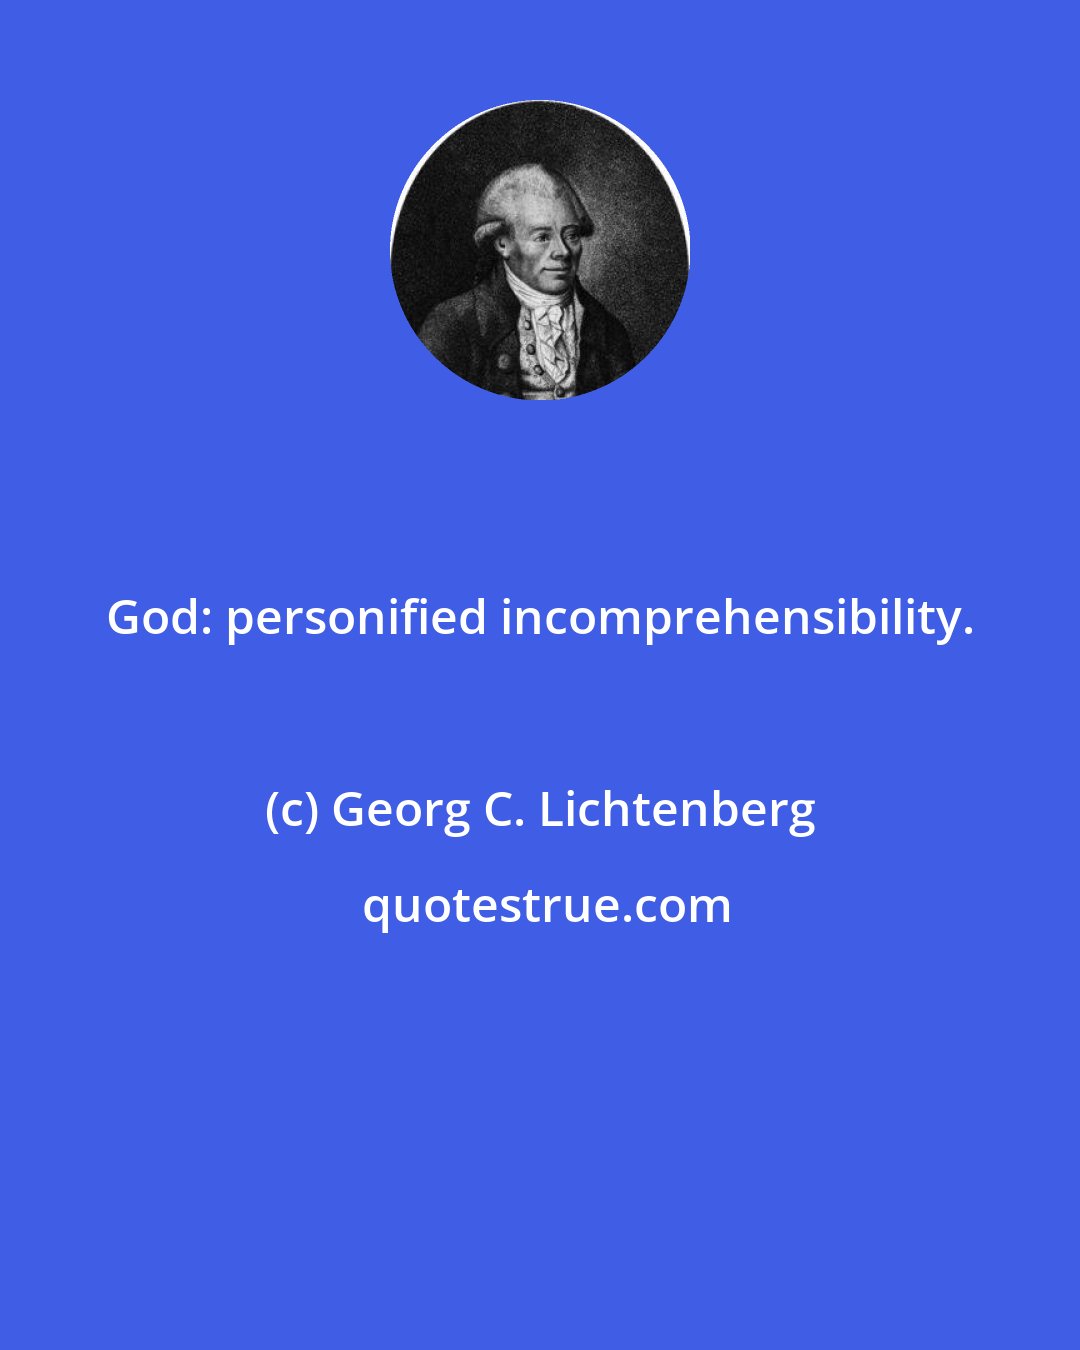 Georg C. Lichtenberg: God: personified incomprehensibility.